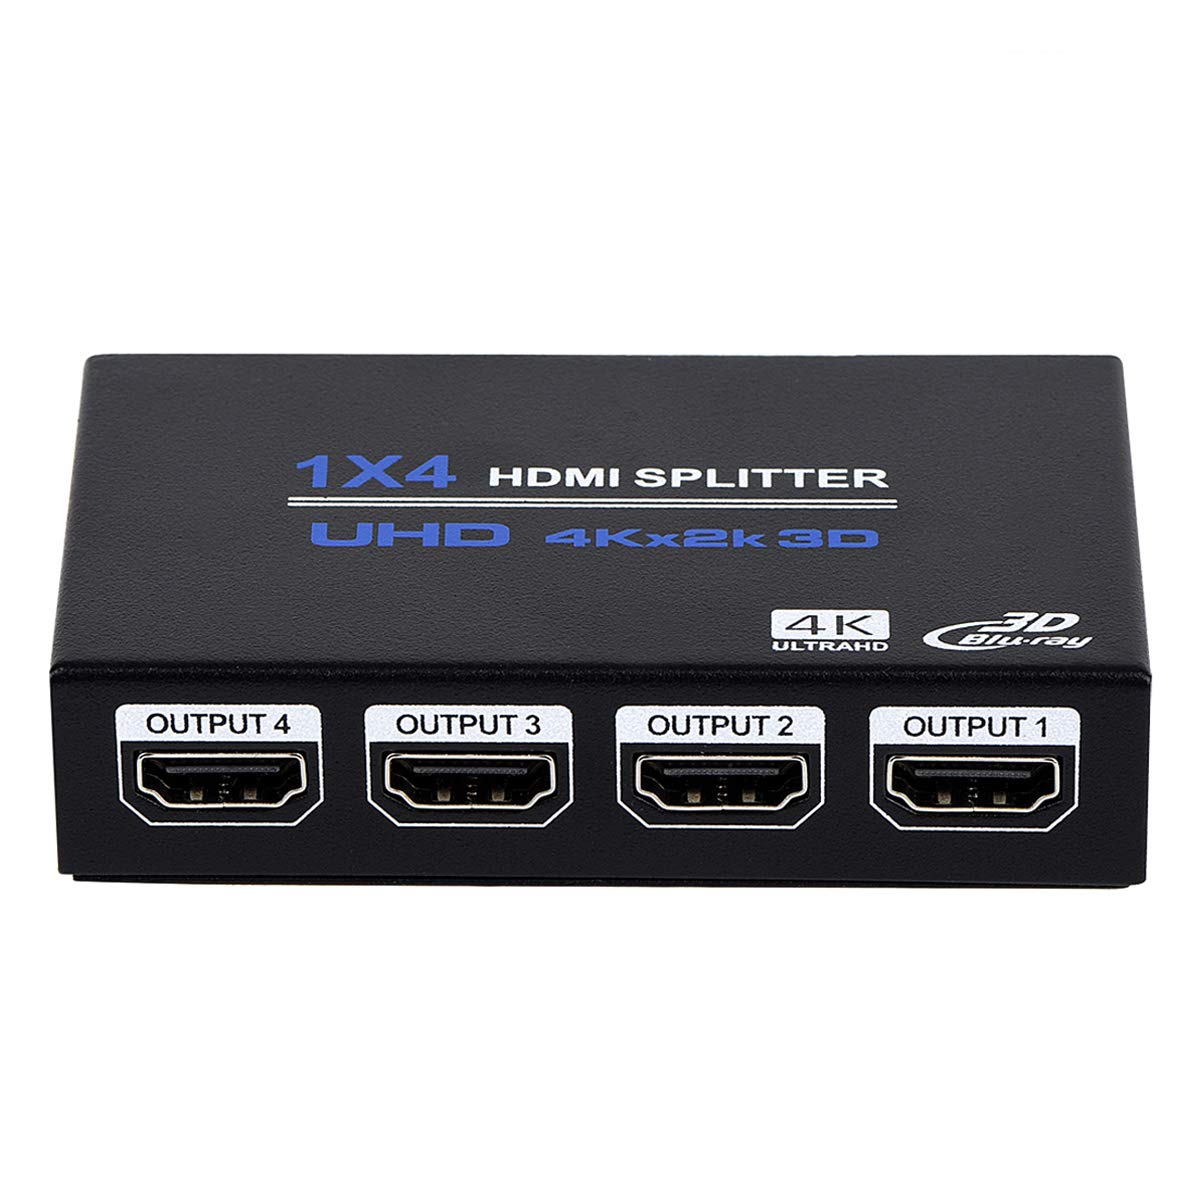 HDMI Splitter - 1 to 4